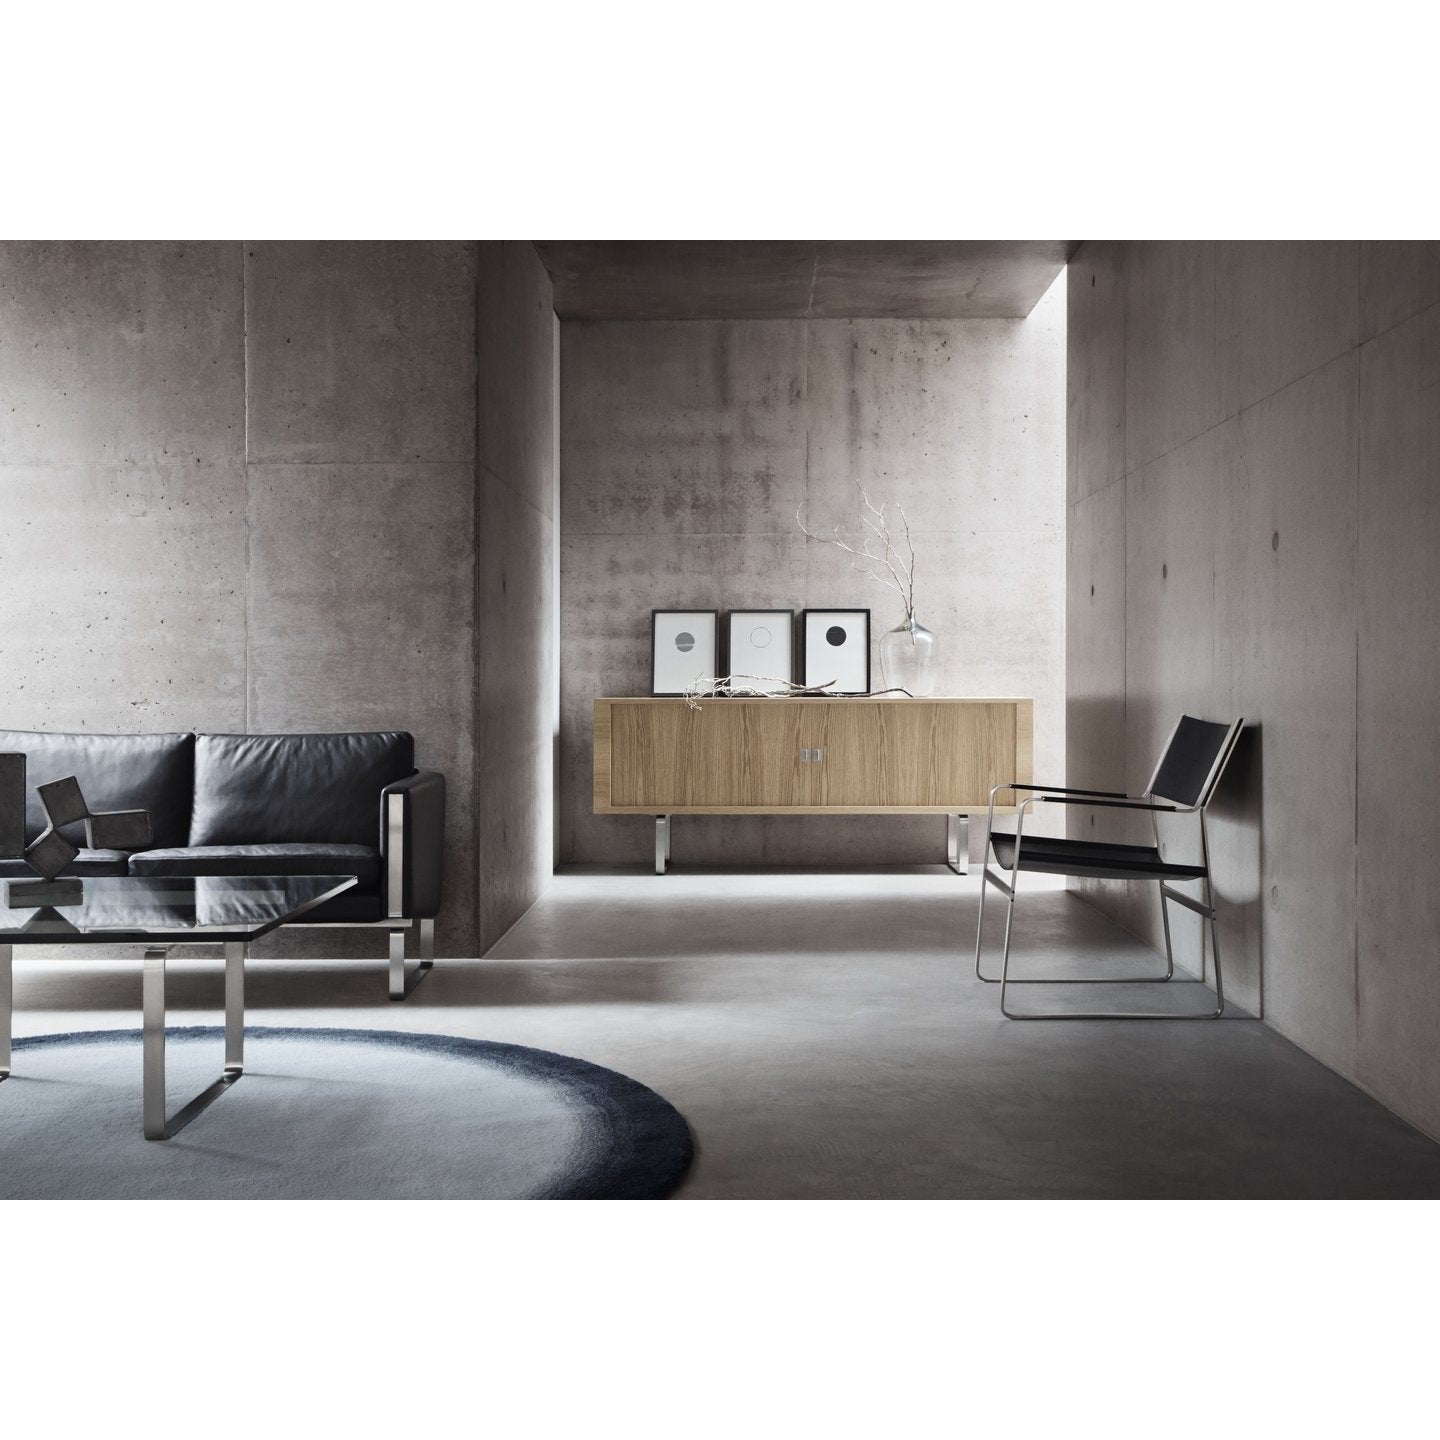 Carl Hansen Ch102 Sofa, Steel/Brown Leather